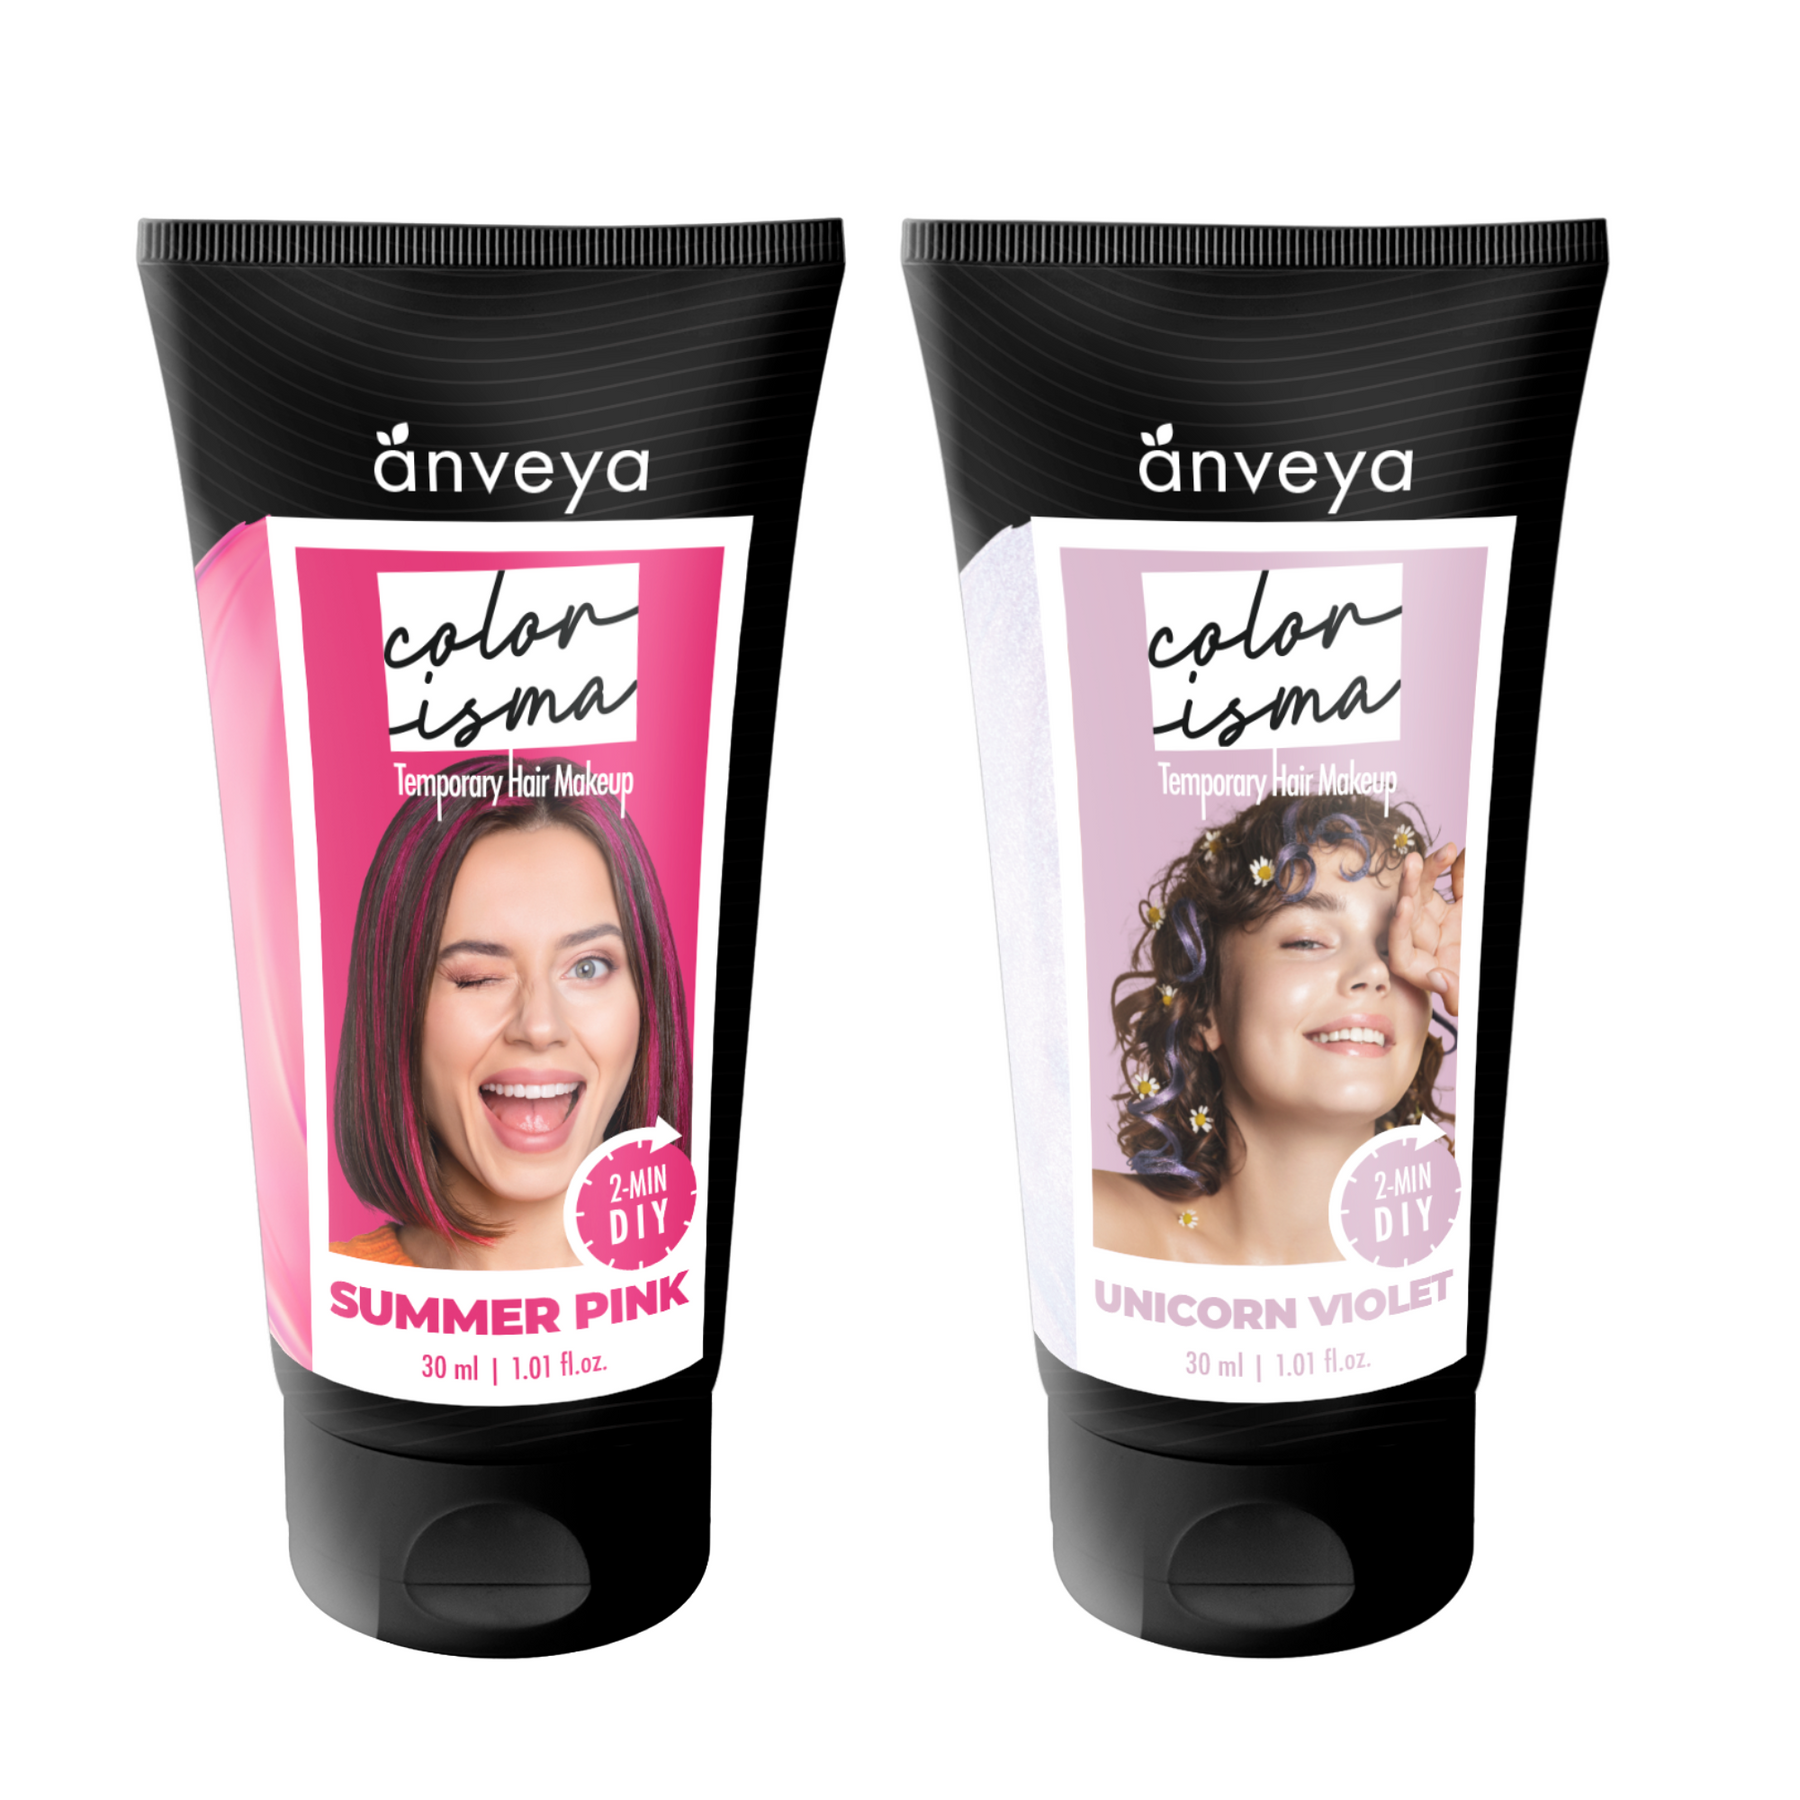 Anveya Colorisma Unicorn Violet, Summer Pink Temporary Hair Color, 30ml each